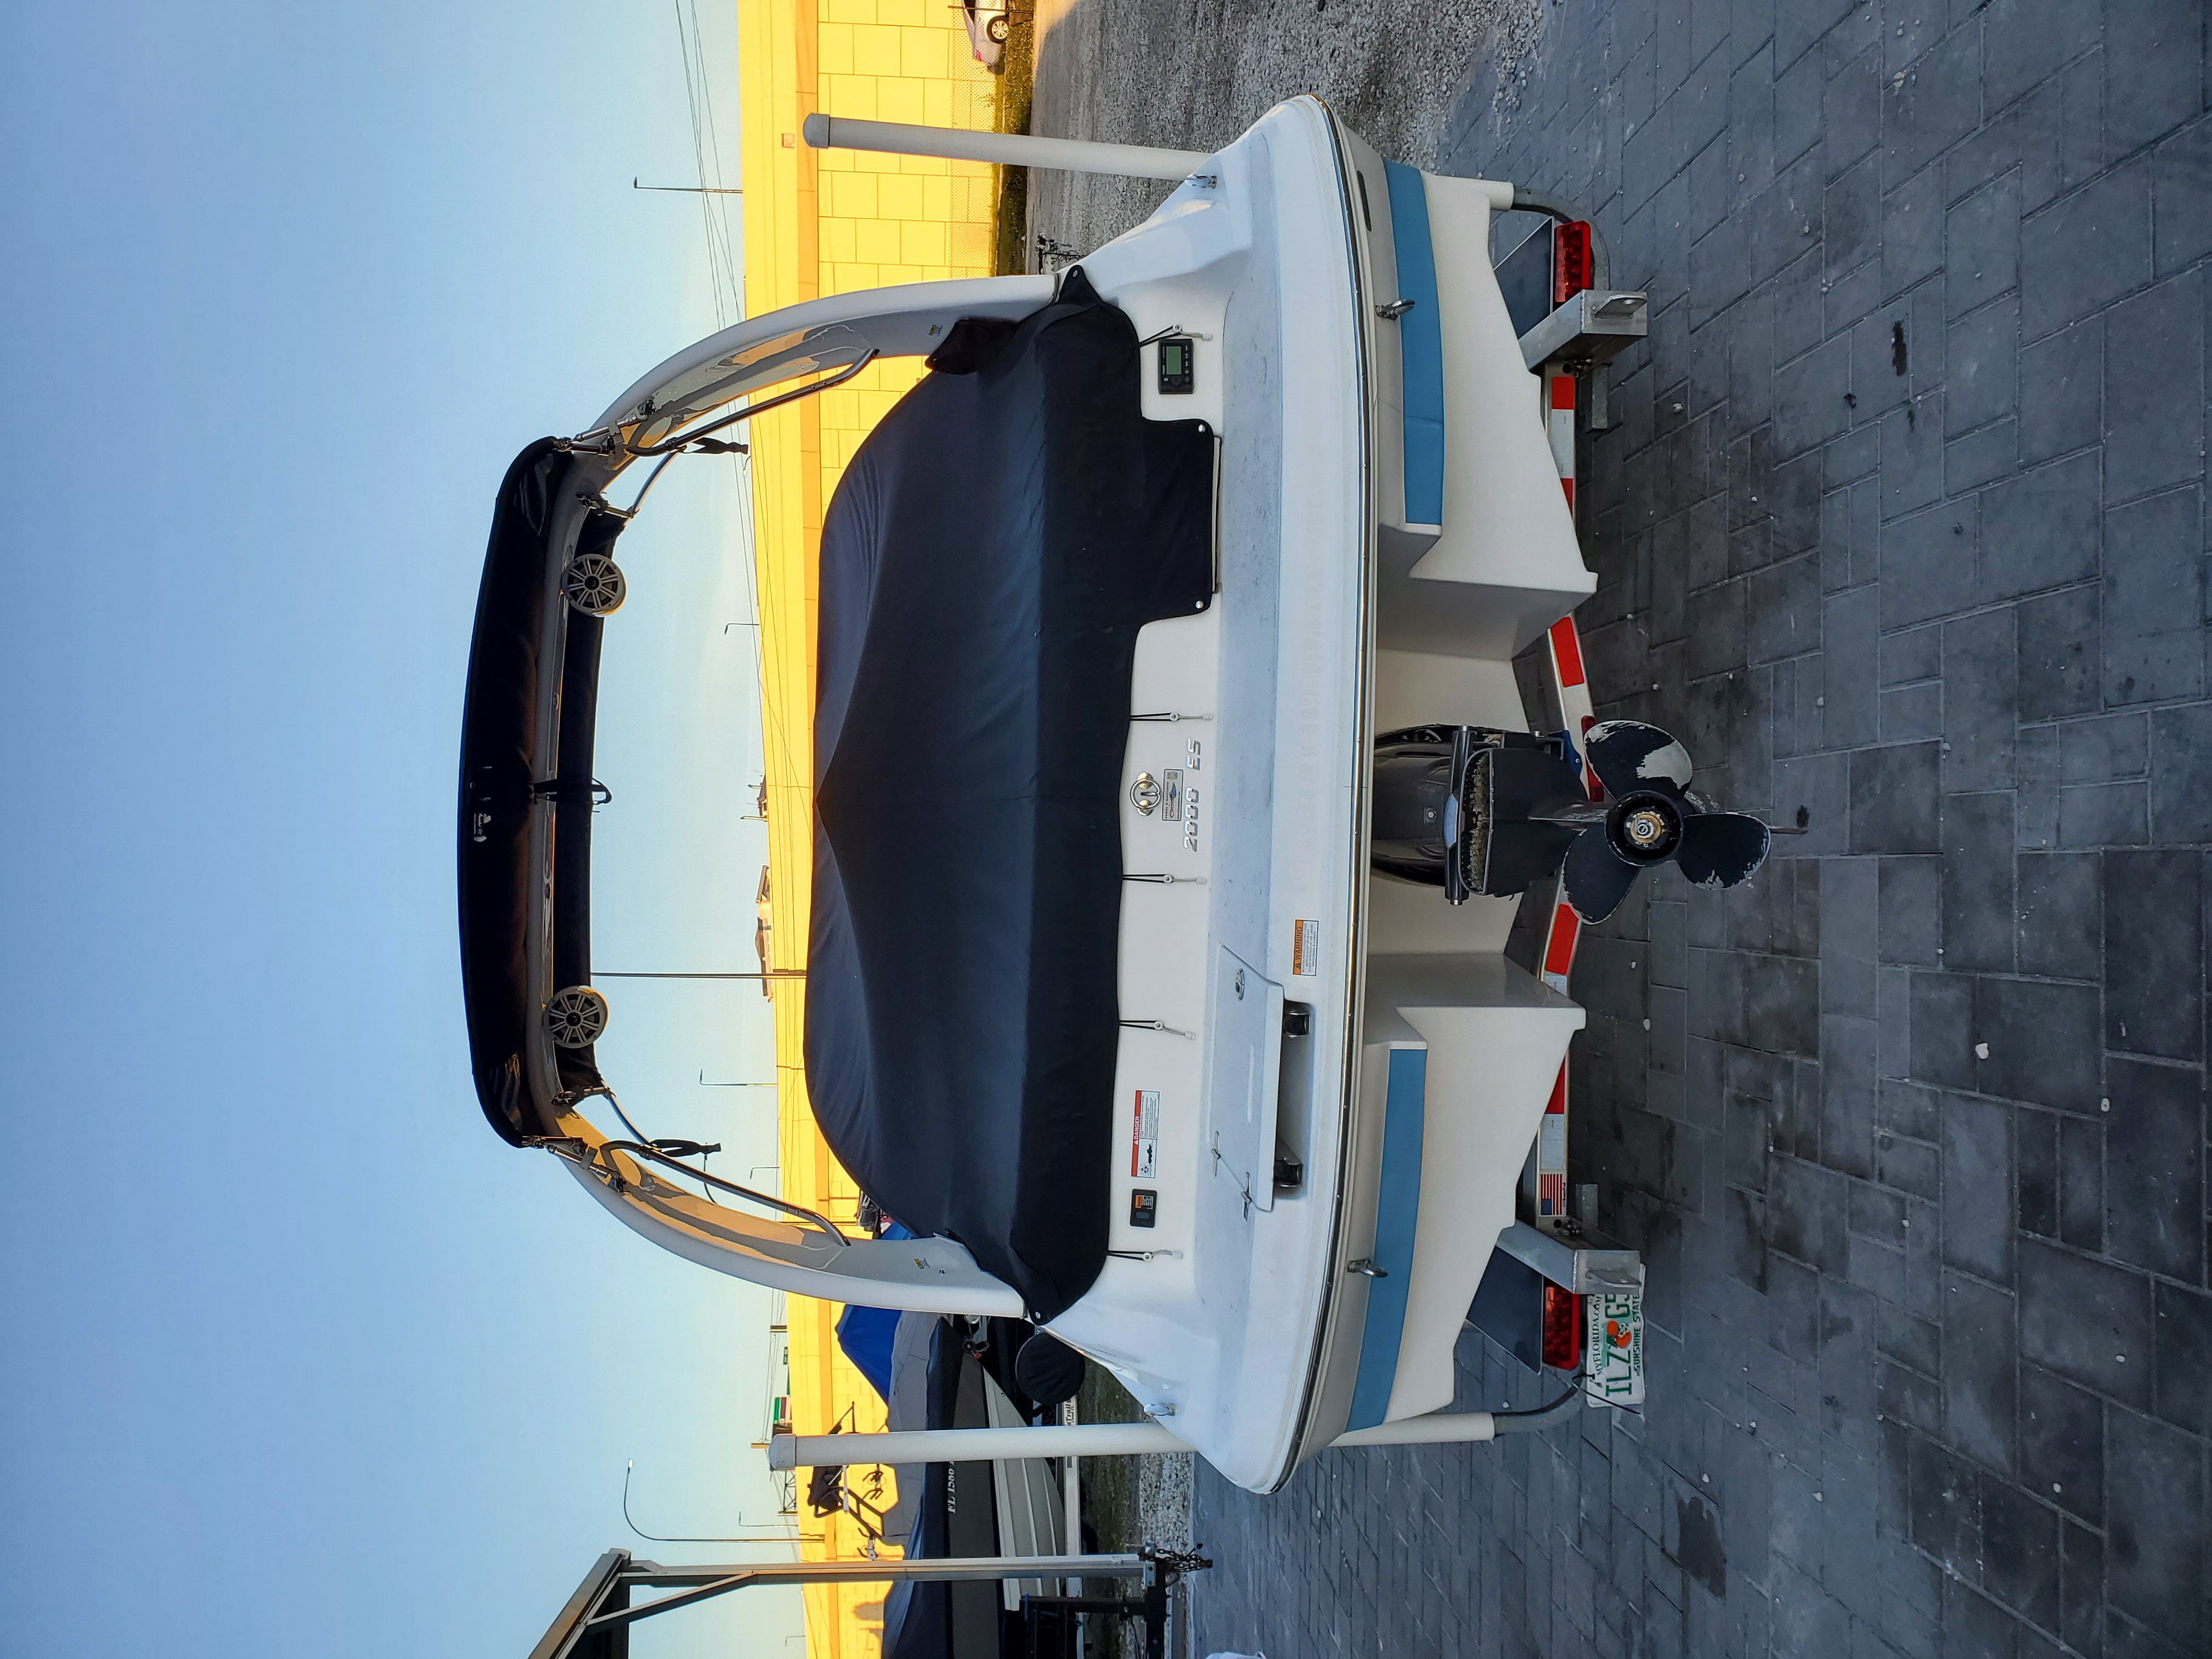 2017 Regal 2000 ES Power boat for sale in Kiawah Island, SC - image 2 